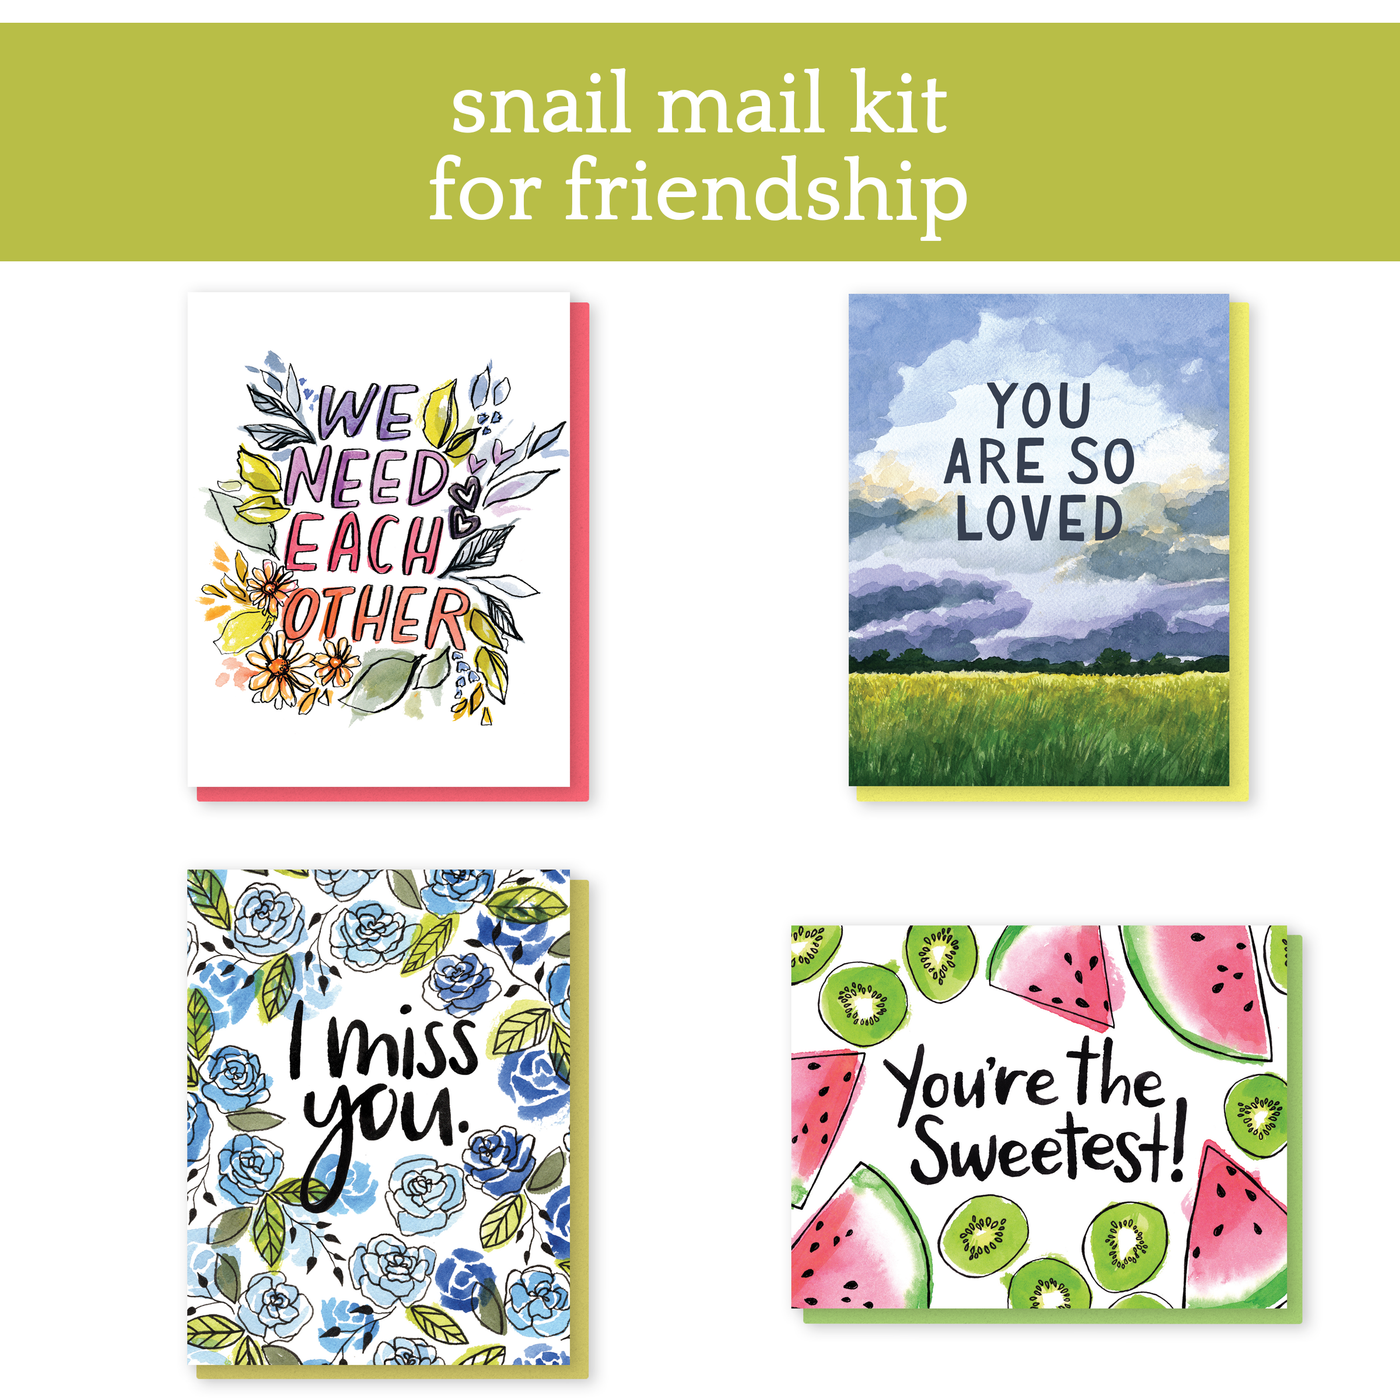 snail mail kit for friendship